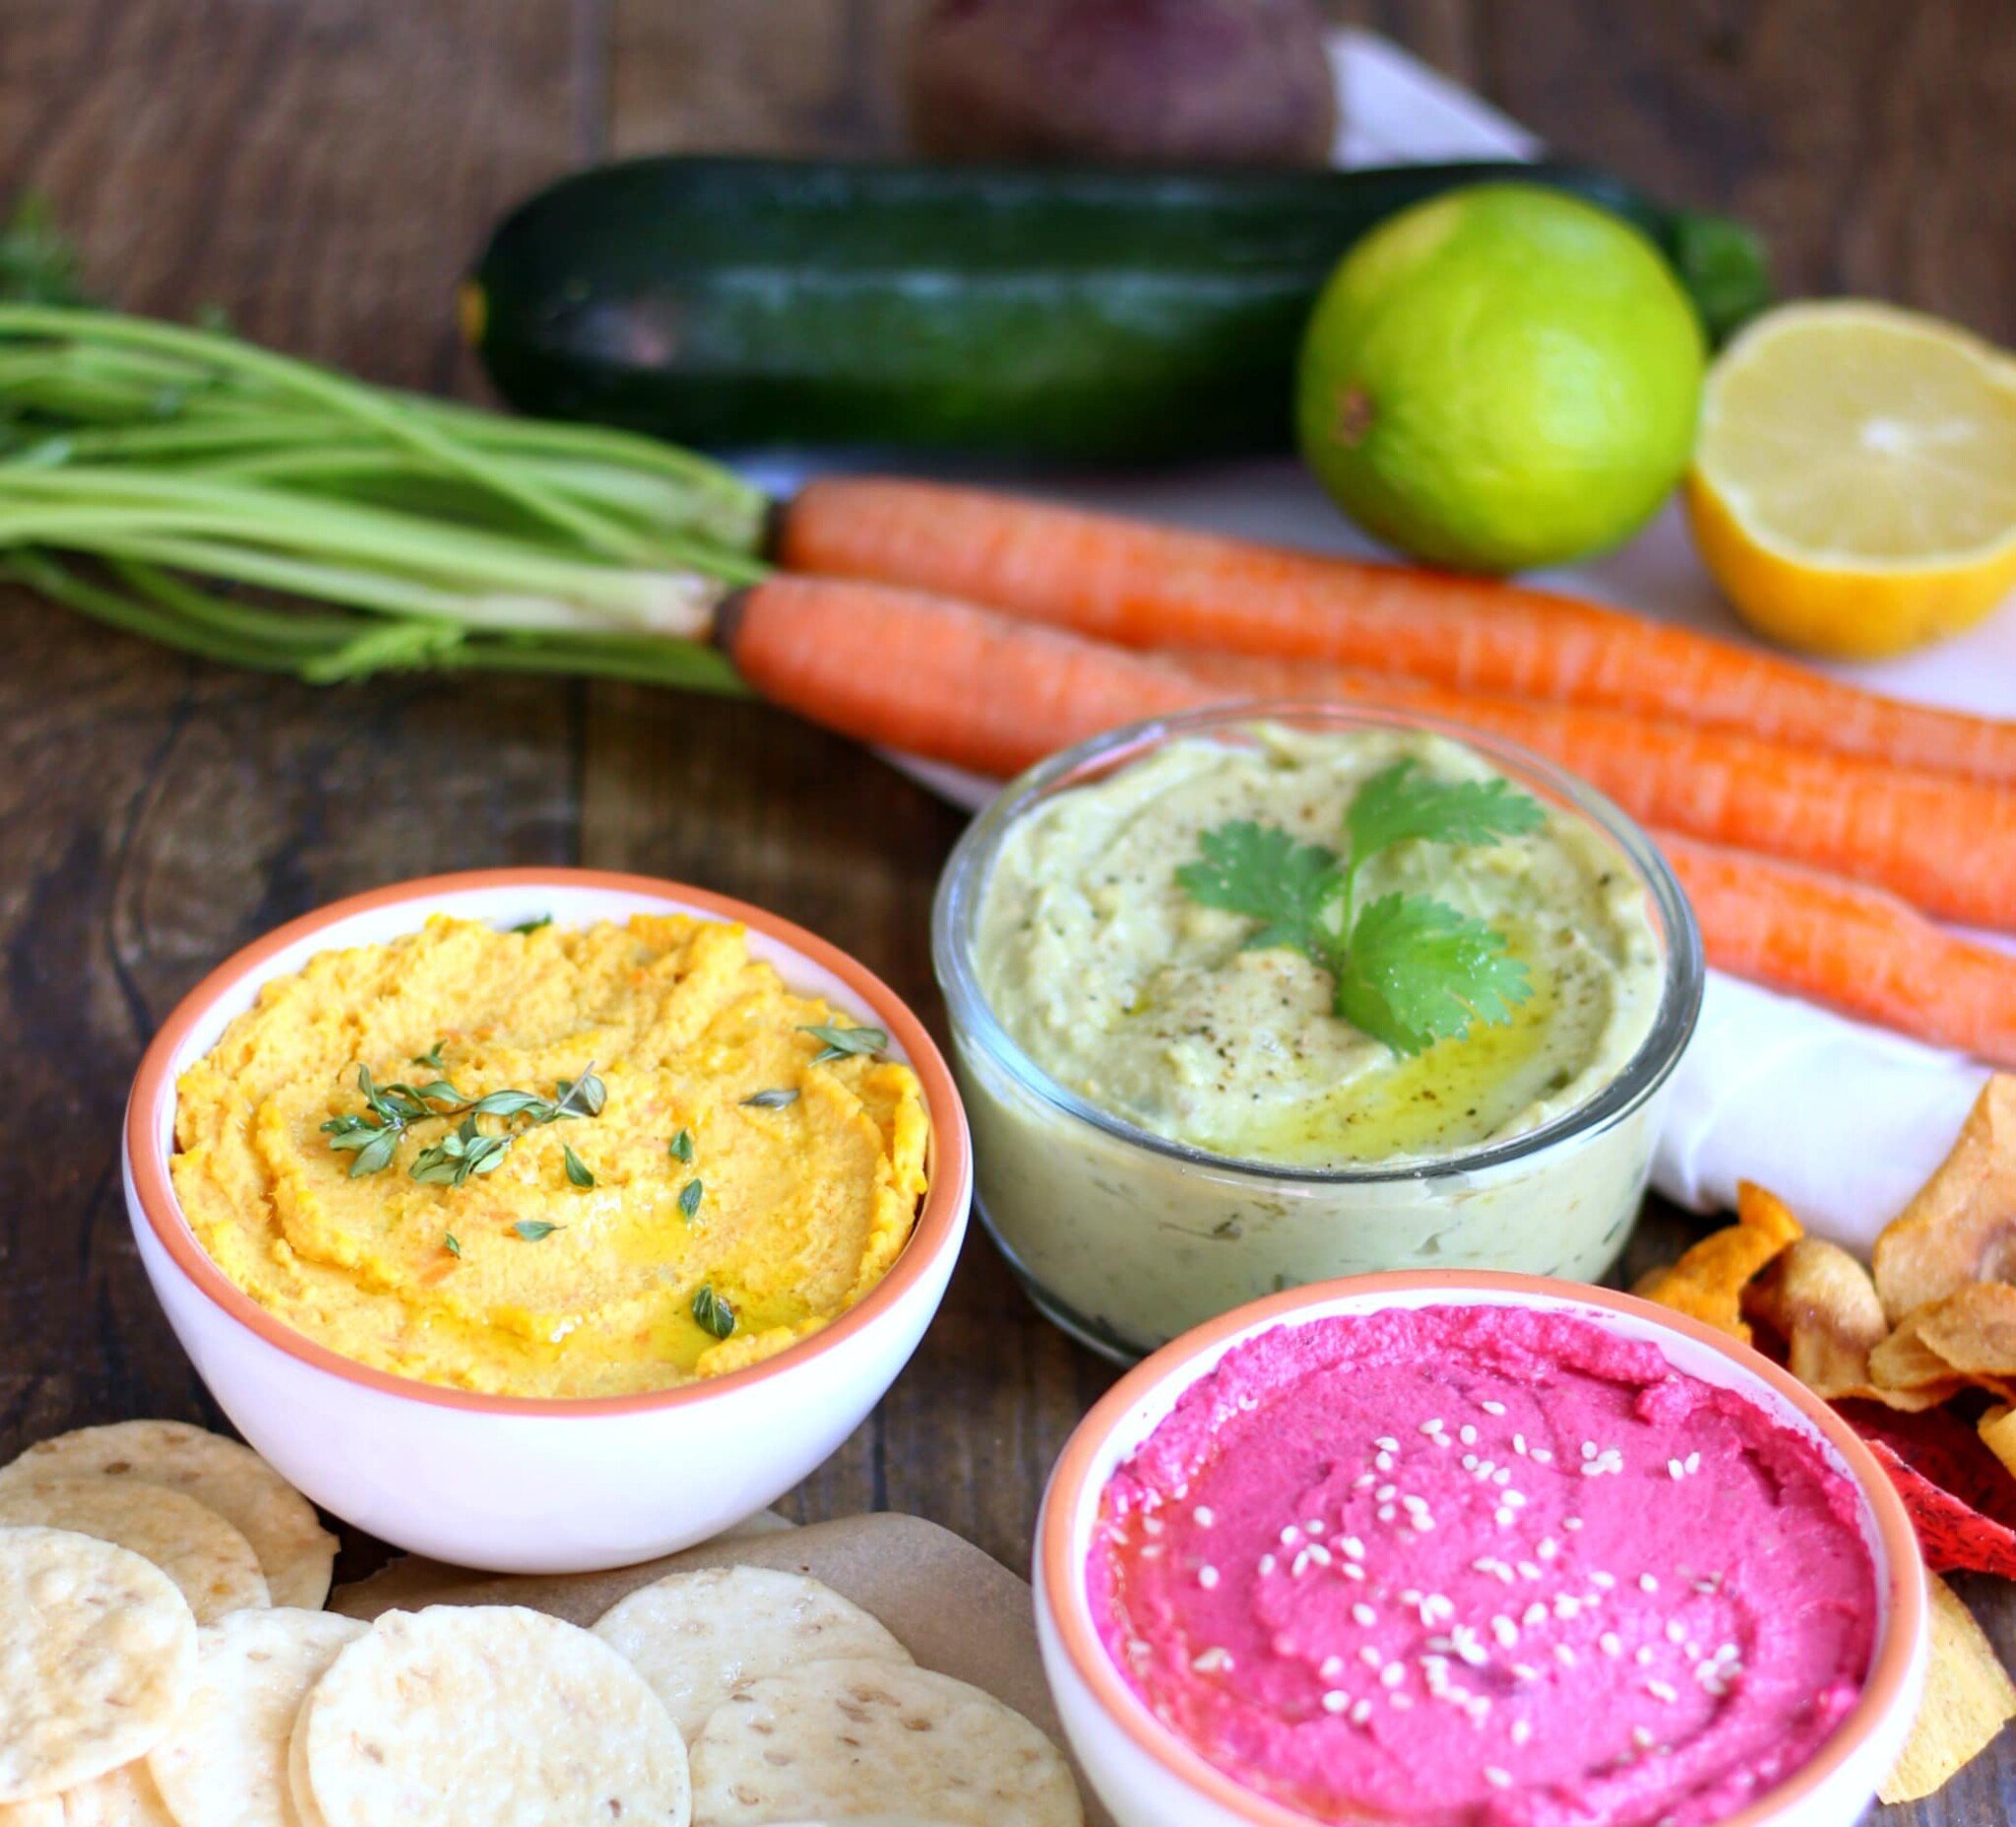 Best Paleo & Vegan Hummus Recipes